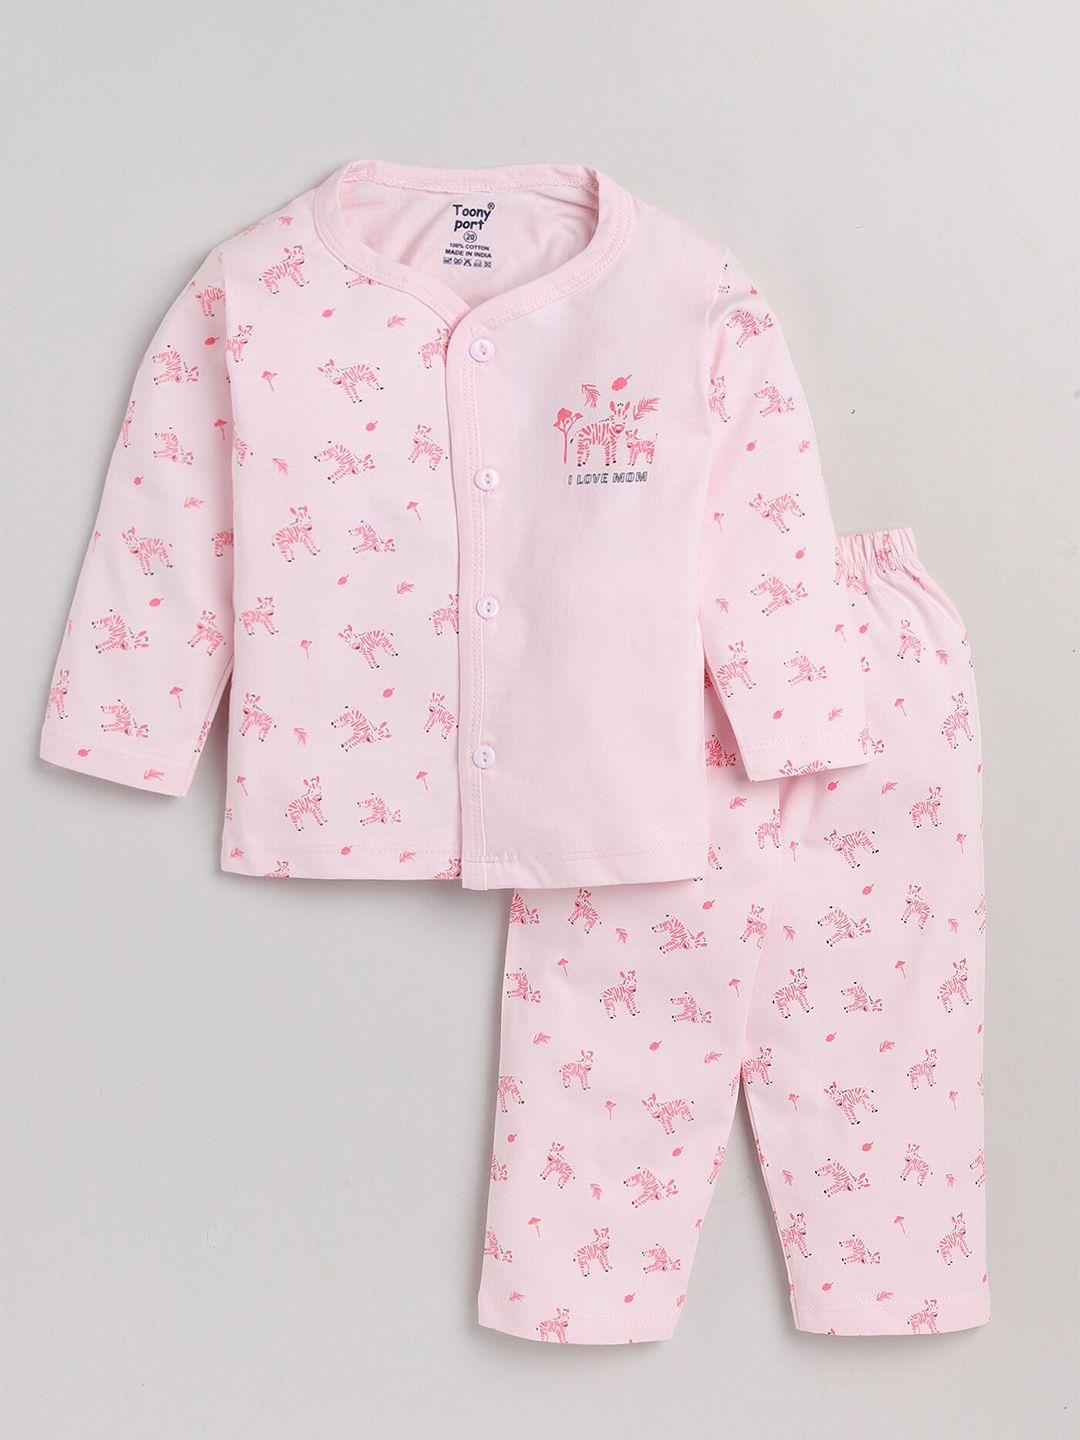 toonyport kids pink printed pure cotton t-shirt with pyjamas